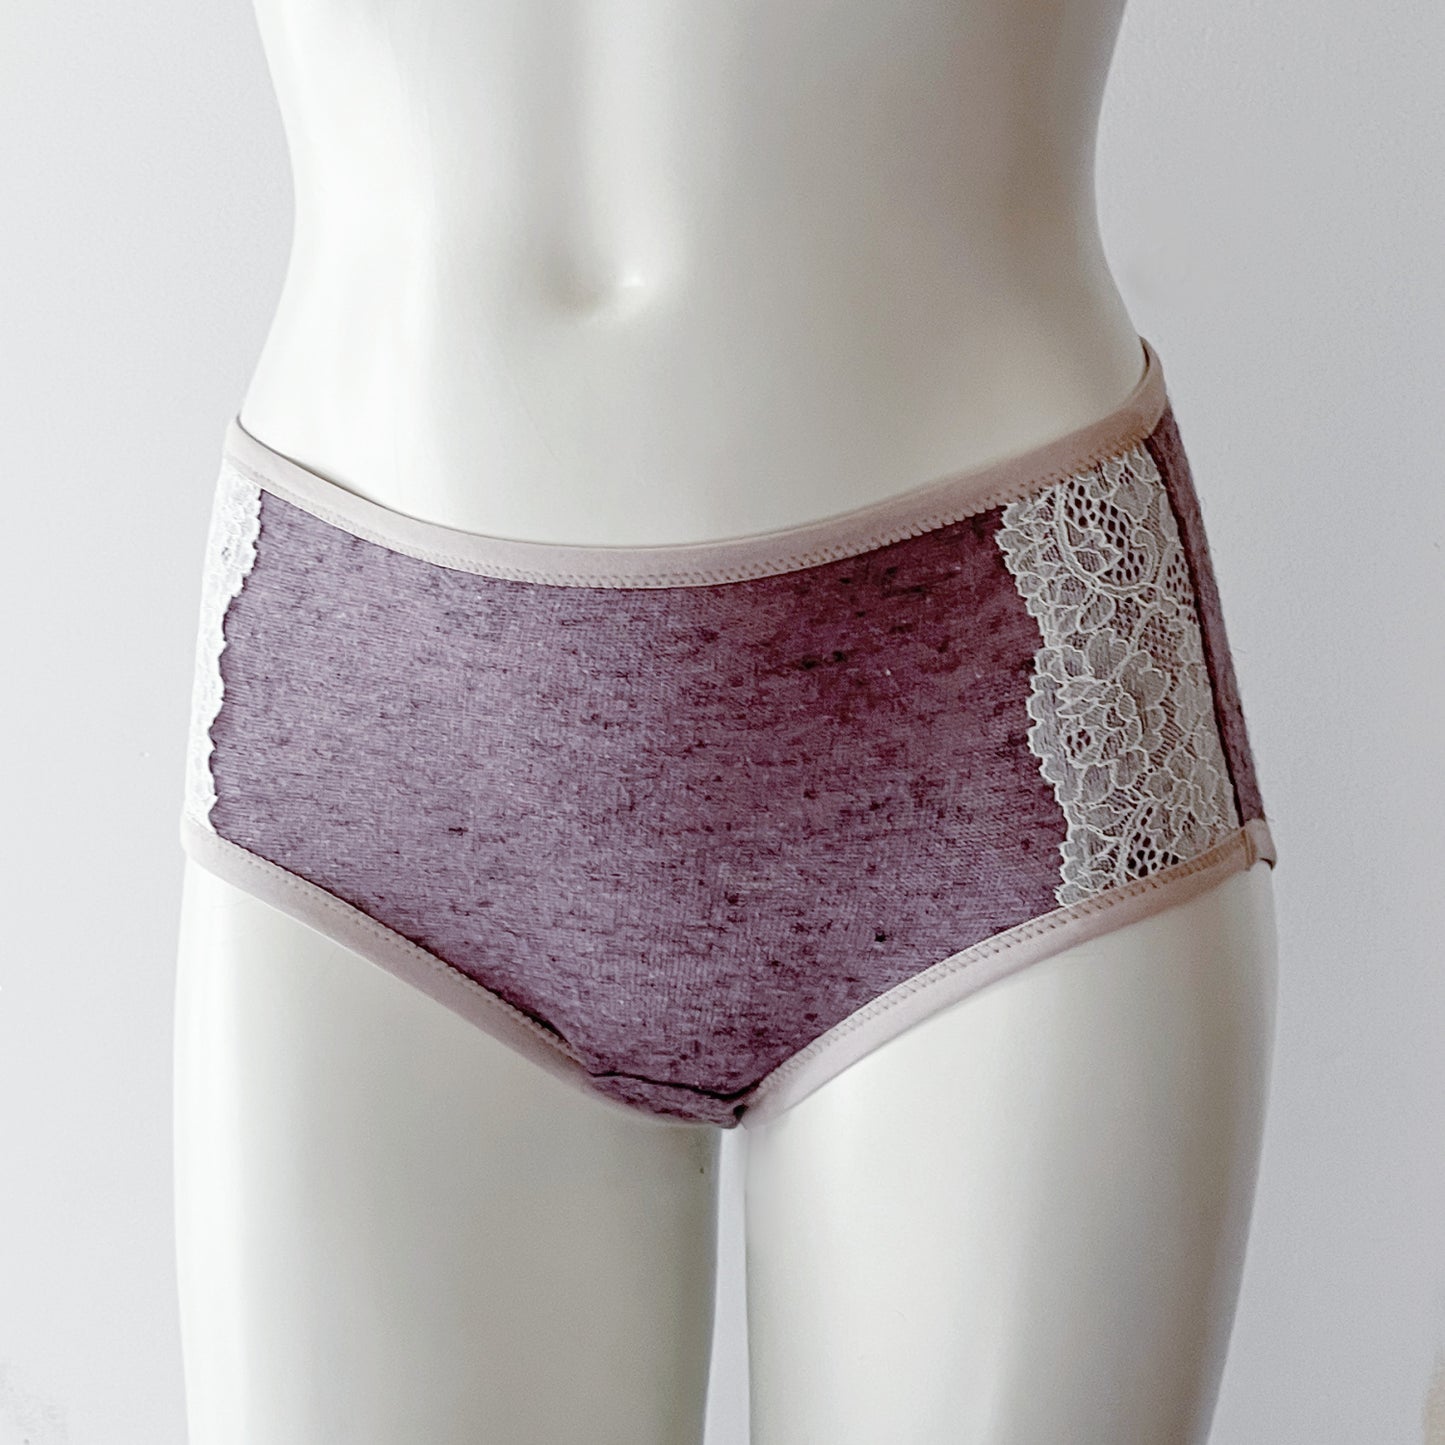 Linen panty underwear brief | Buy 100% linen underwear for women | Made in Canada linen lingerie + clothing shop | Econica